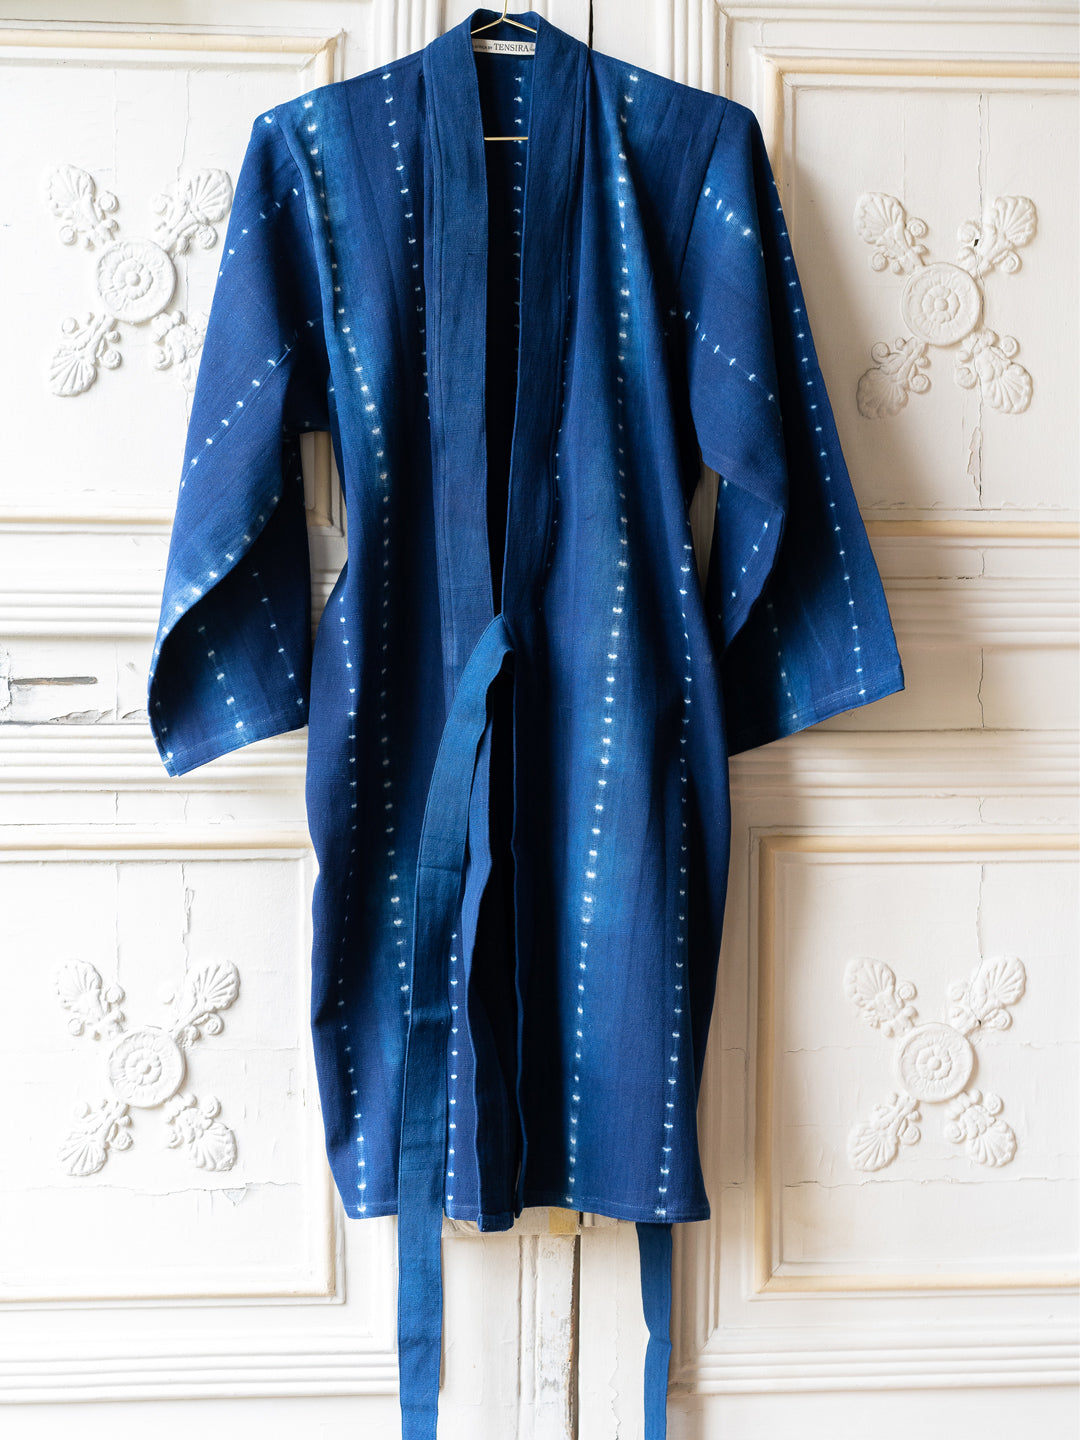 Kimono Tensira teint 100% la à main coton